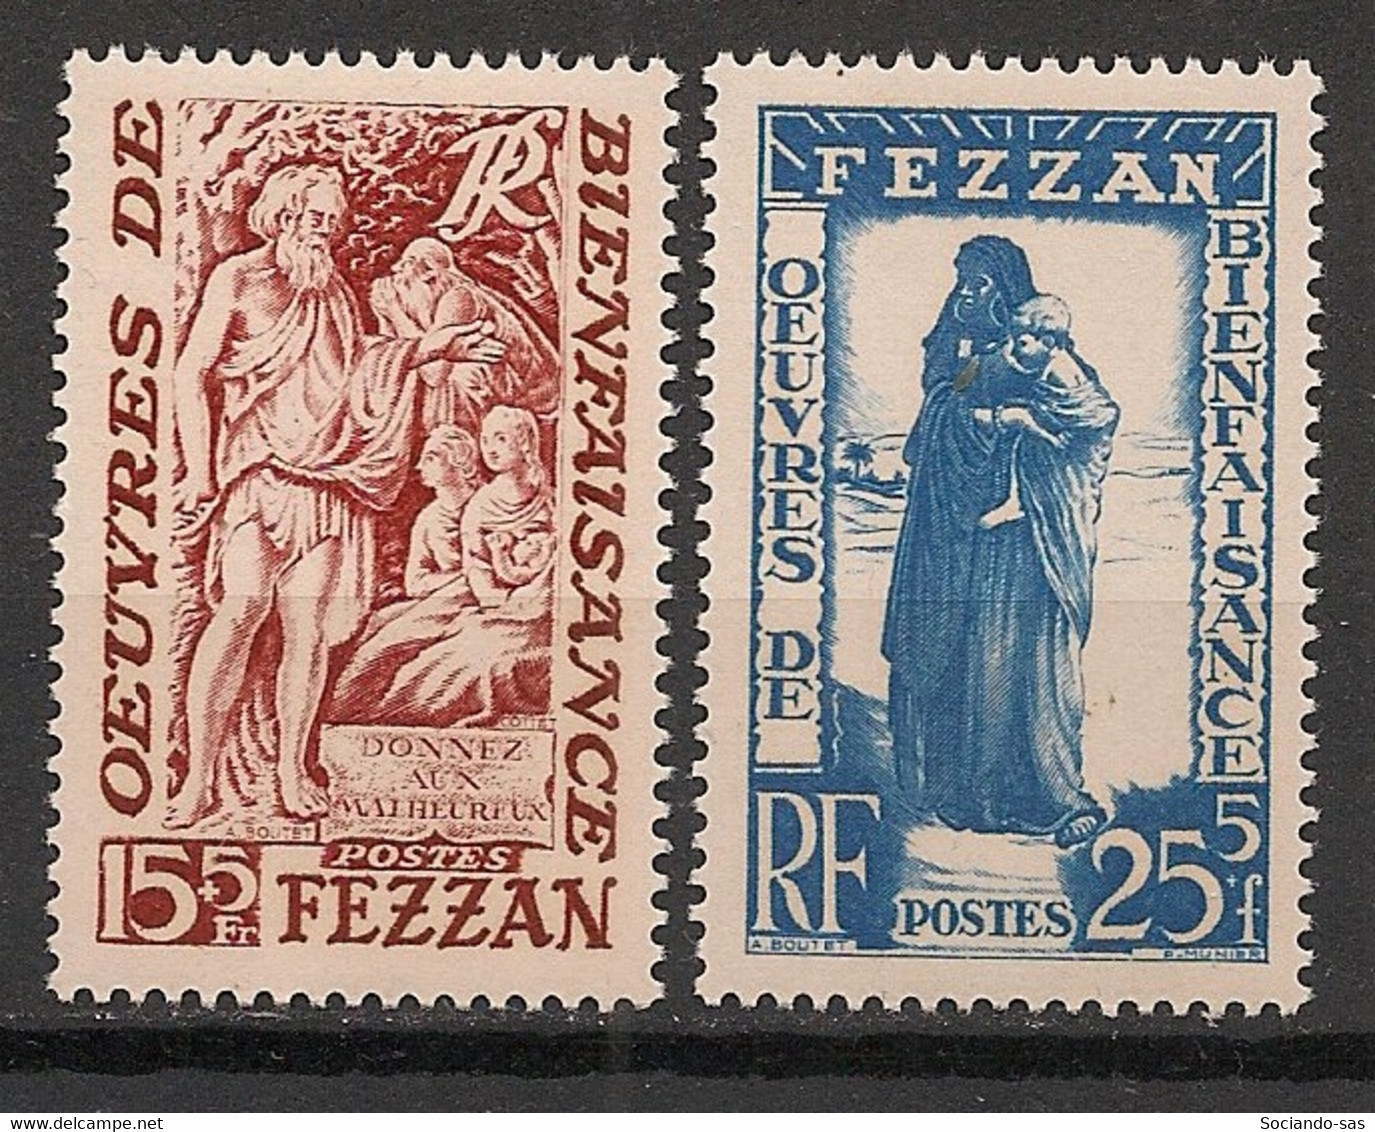 FEZZAN - 1950 - N°Yv. 54 à 55 - Série Complète - Neuf Luxe ** / MNH / Postfrisch - Nuovi